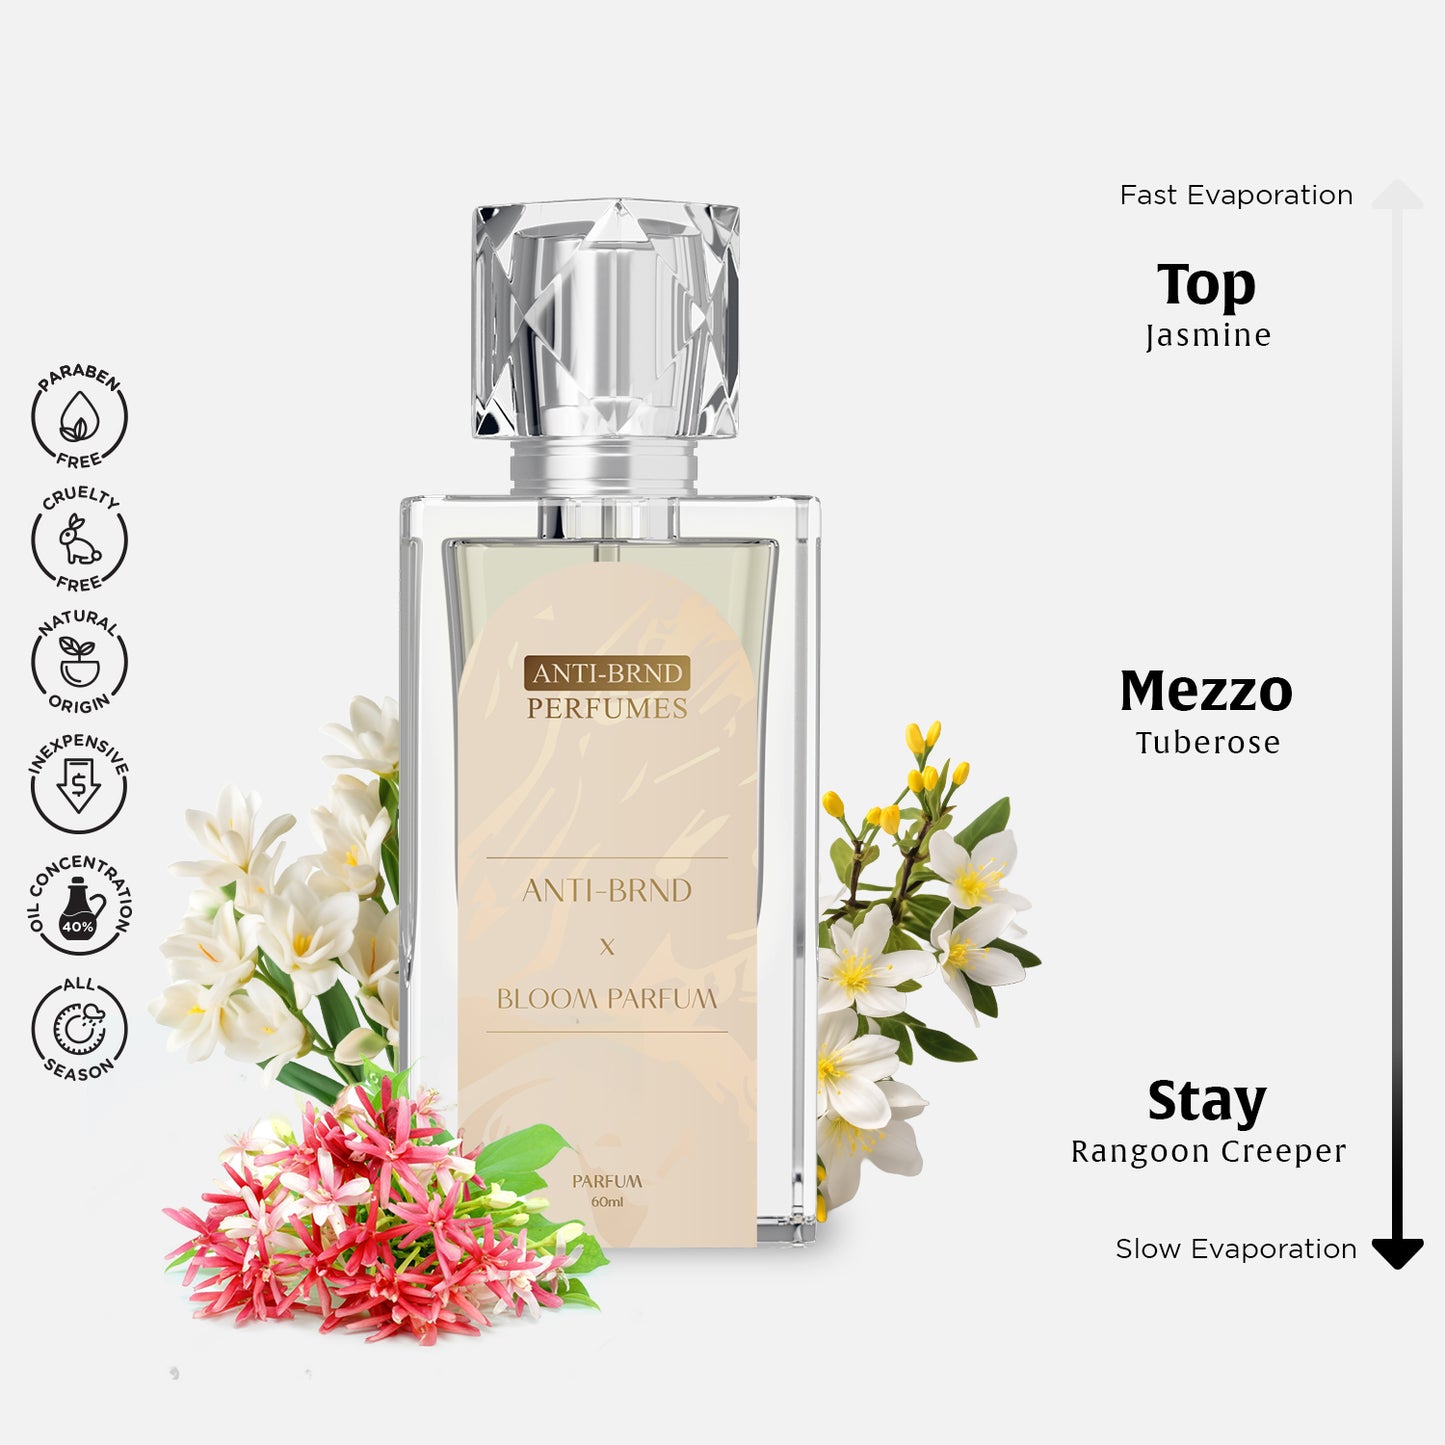 ANTI-BRND X Bloom Parfum